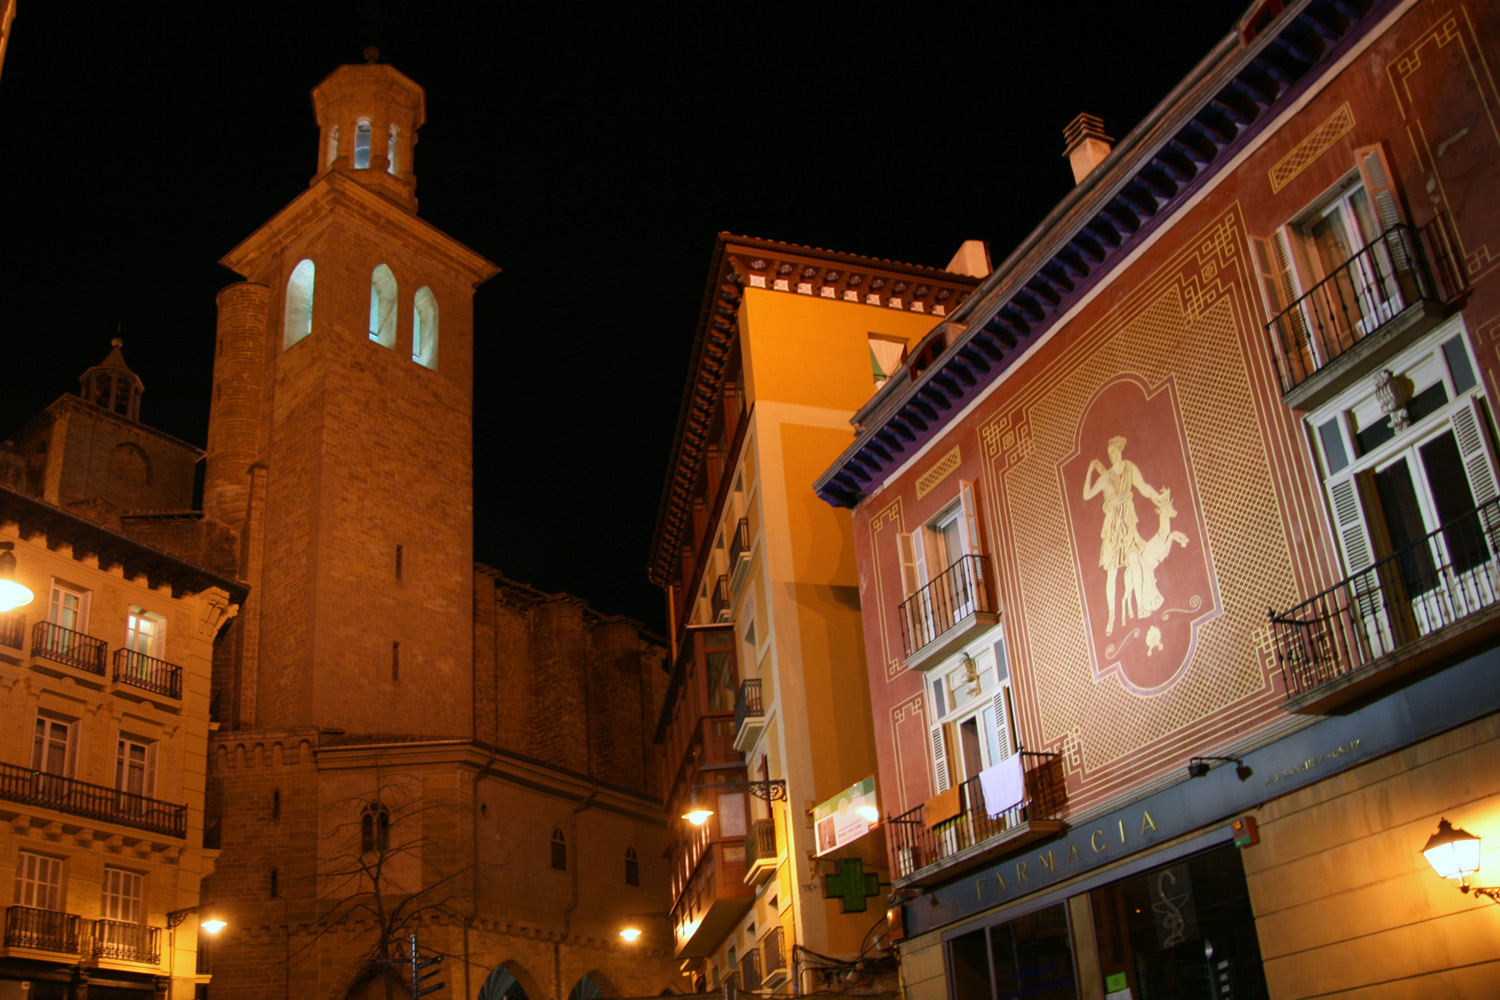 St. Cernin's Church Tower at Night